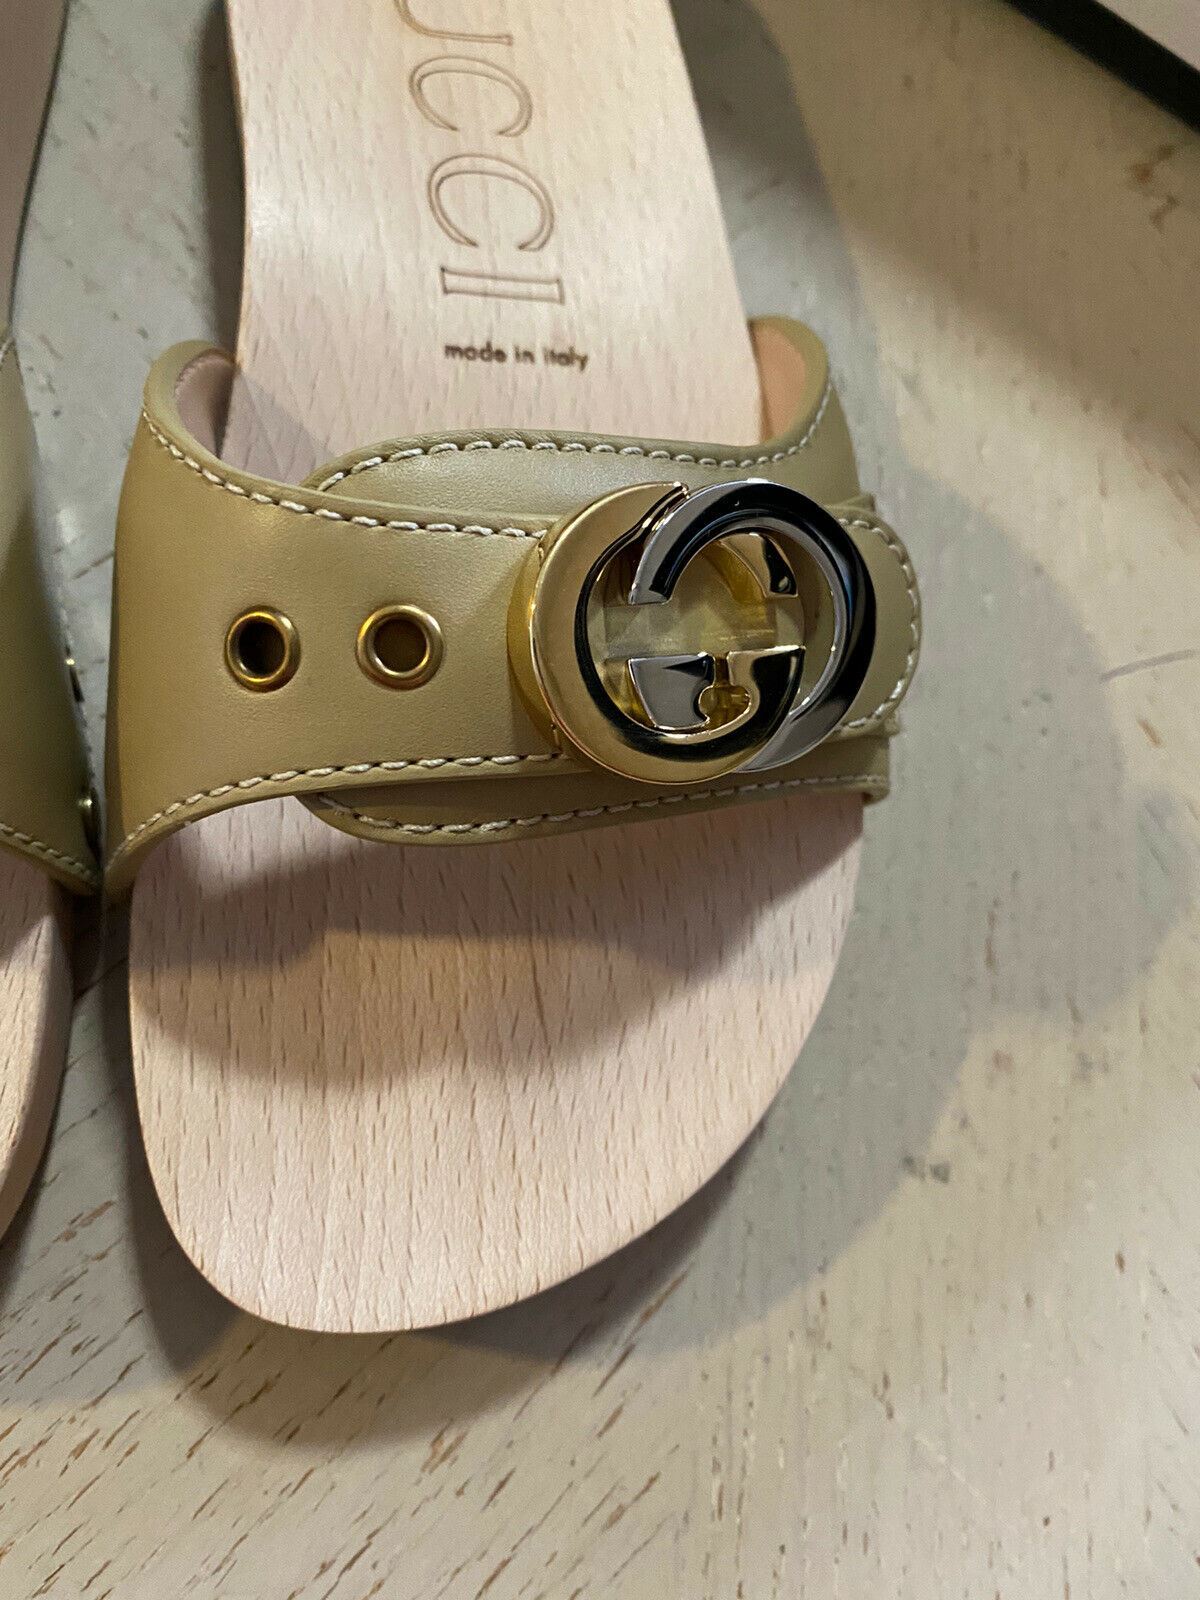 NIB Gucci Женские сандалии из кожи/дерева, бежевые 5 США (35 ЕС) Италия